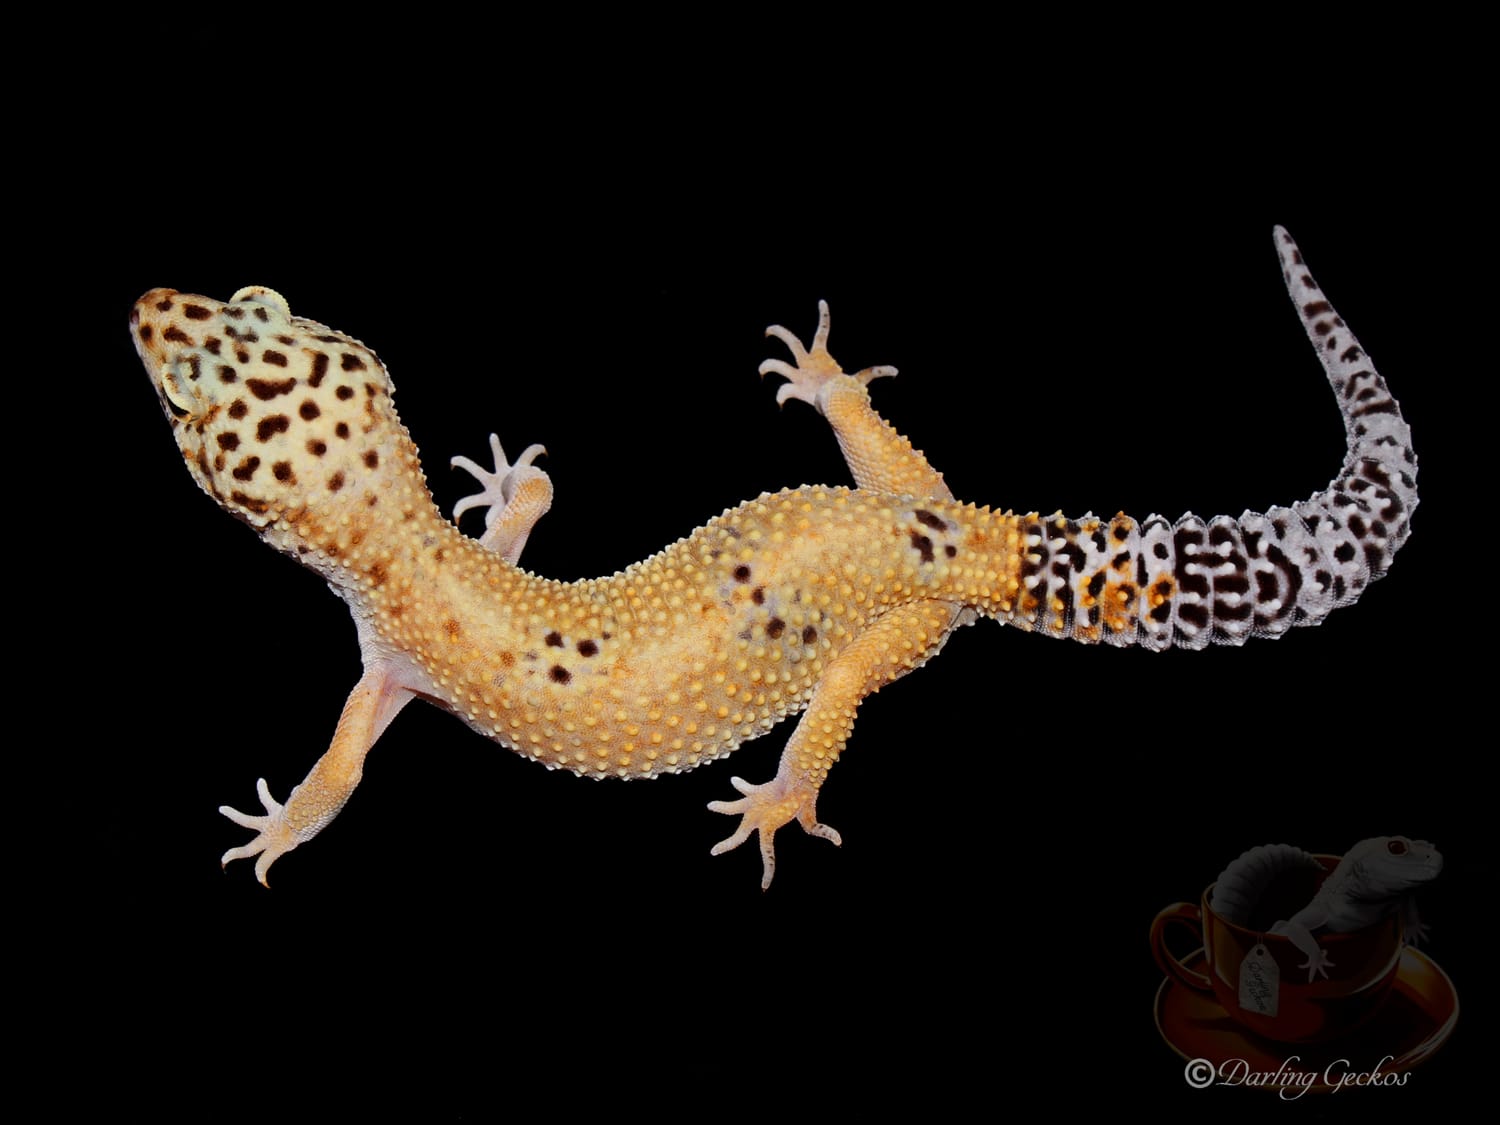 Atomic Afghan Cross No Hets Leopard Gecko by Darling Geckos